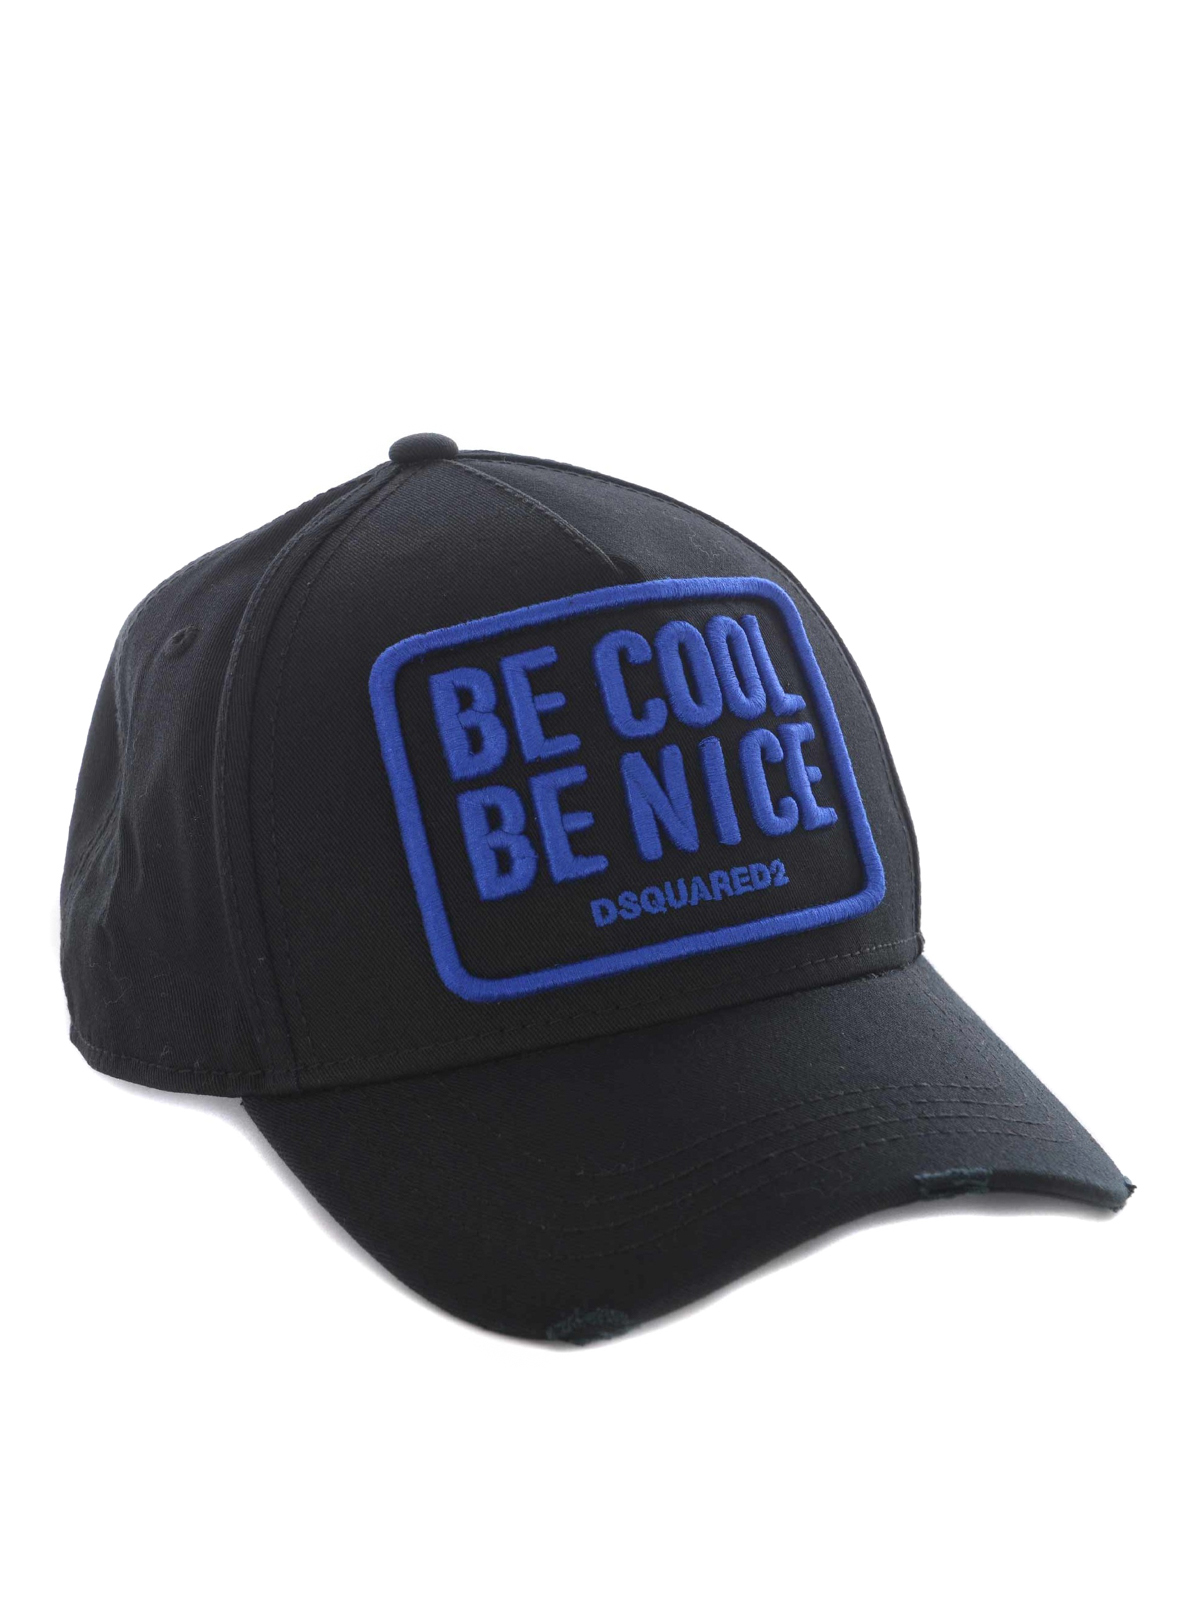 Be Cool Be Nice black baseball cap 